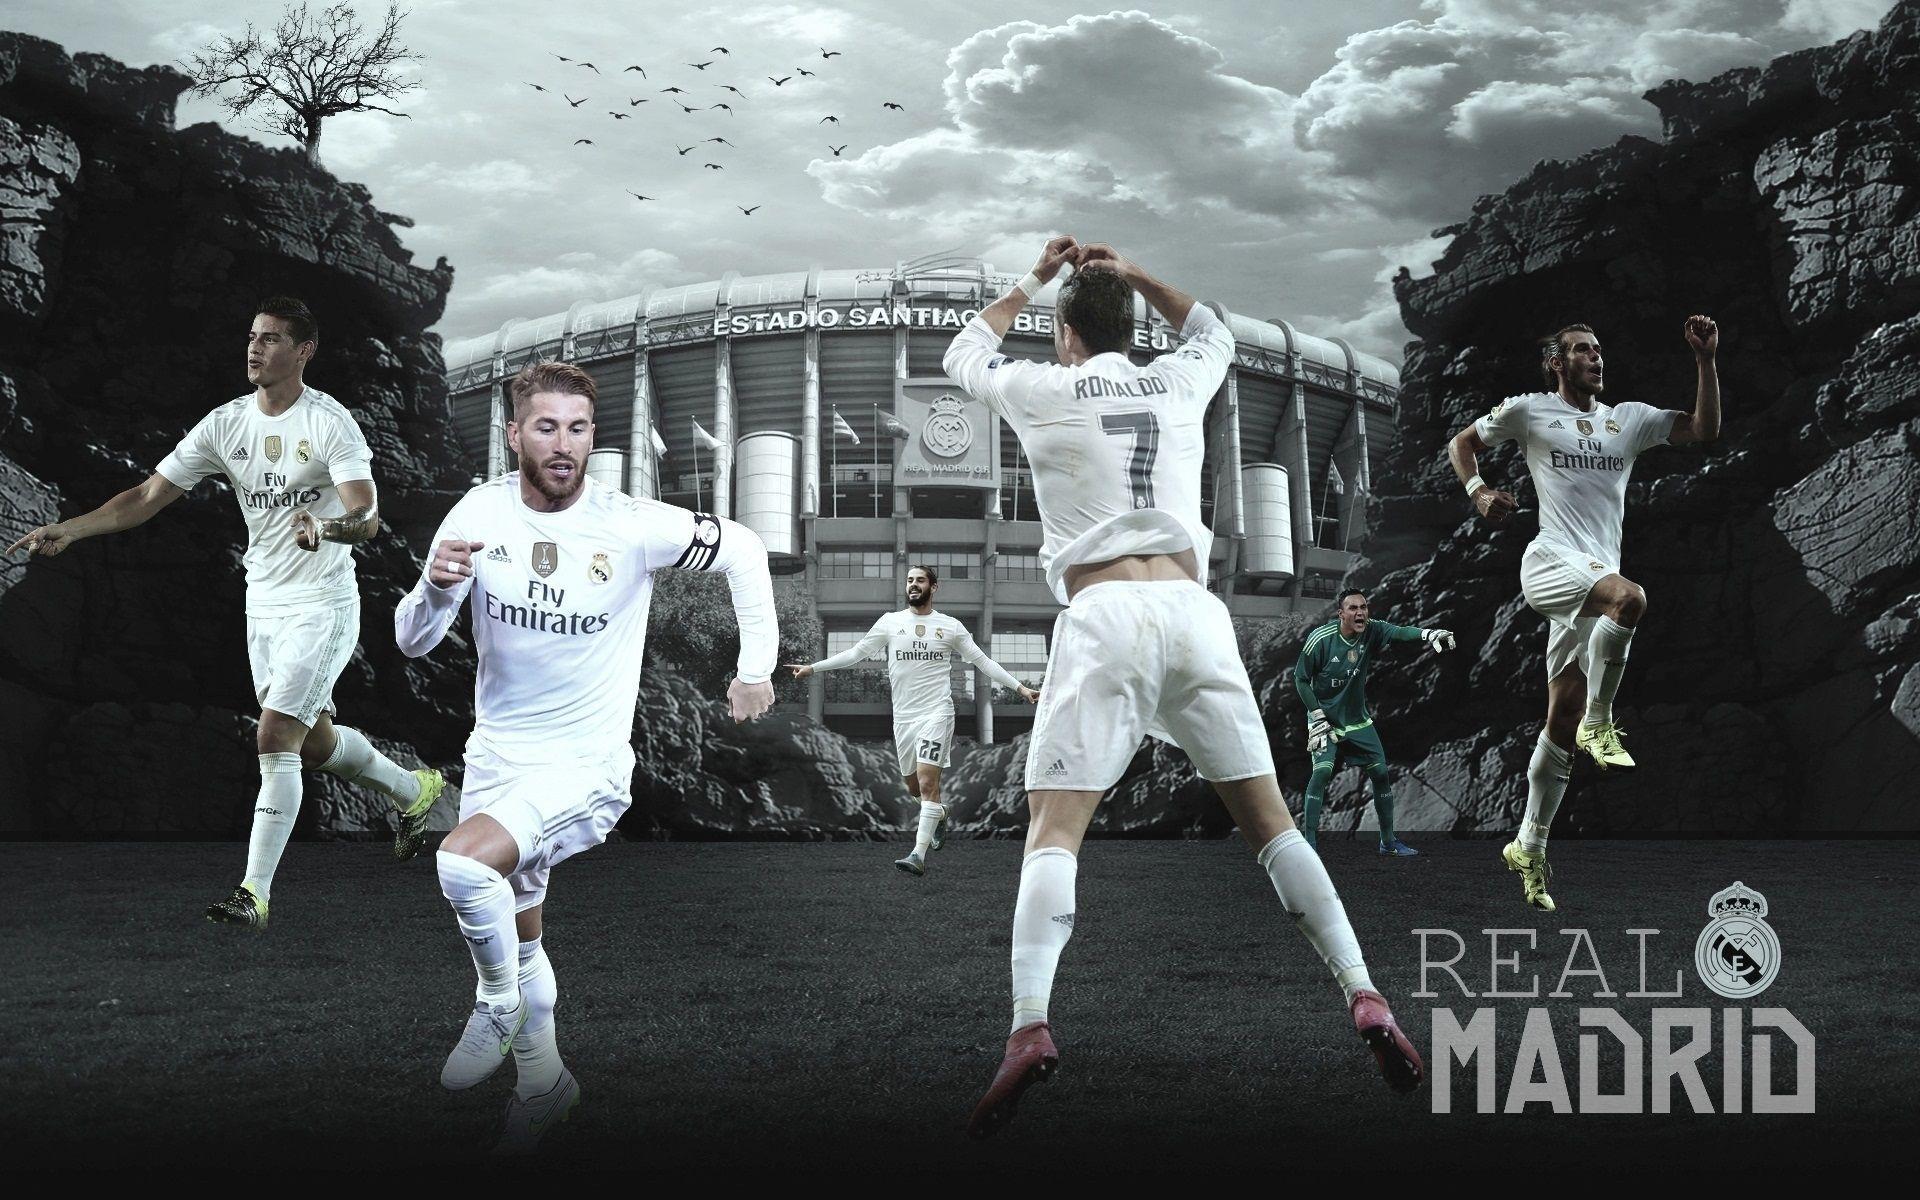 Real Madrid Logo Wallpapers HD 2016 - Wallpaper Cave